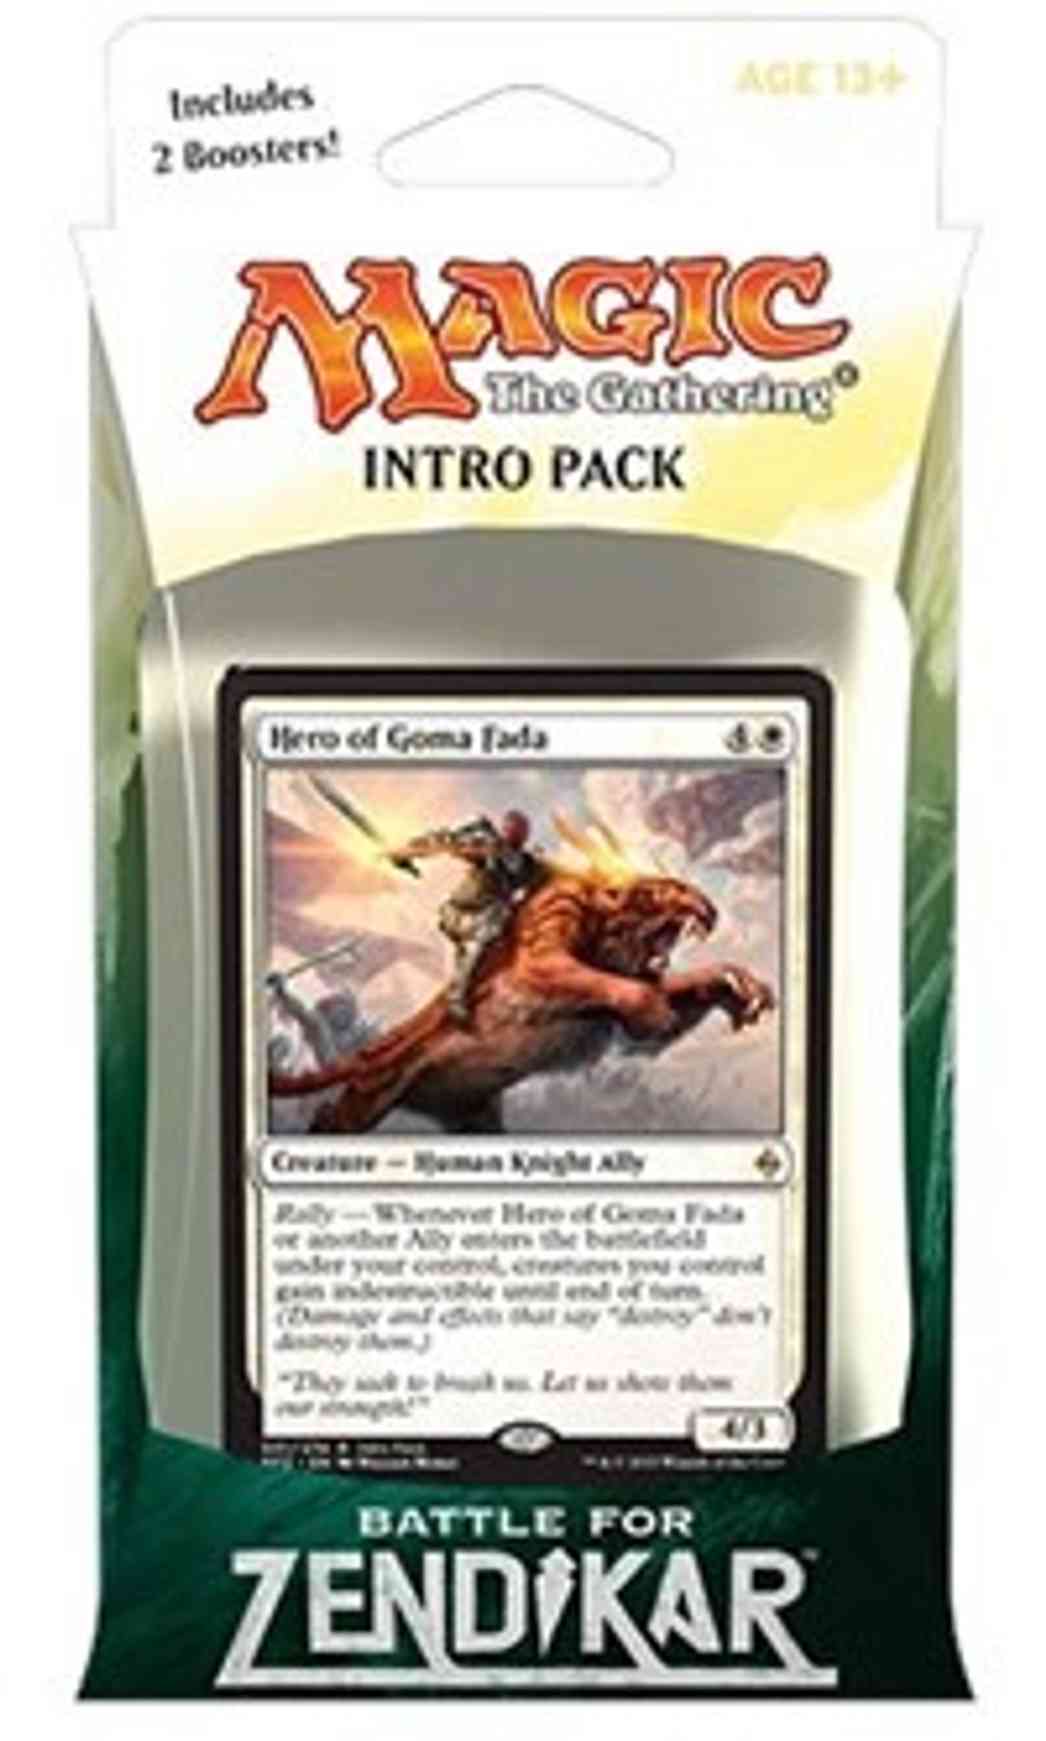 Battle for Zendikar Intro Pack - White magic card front